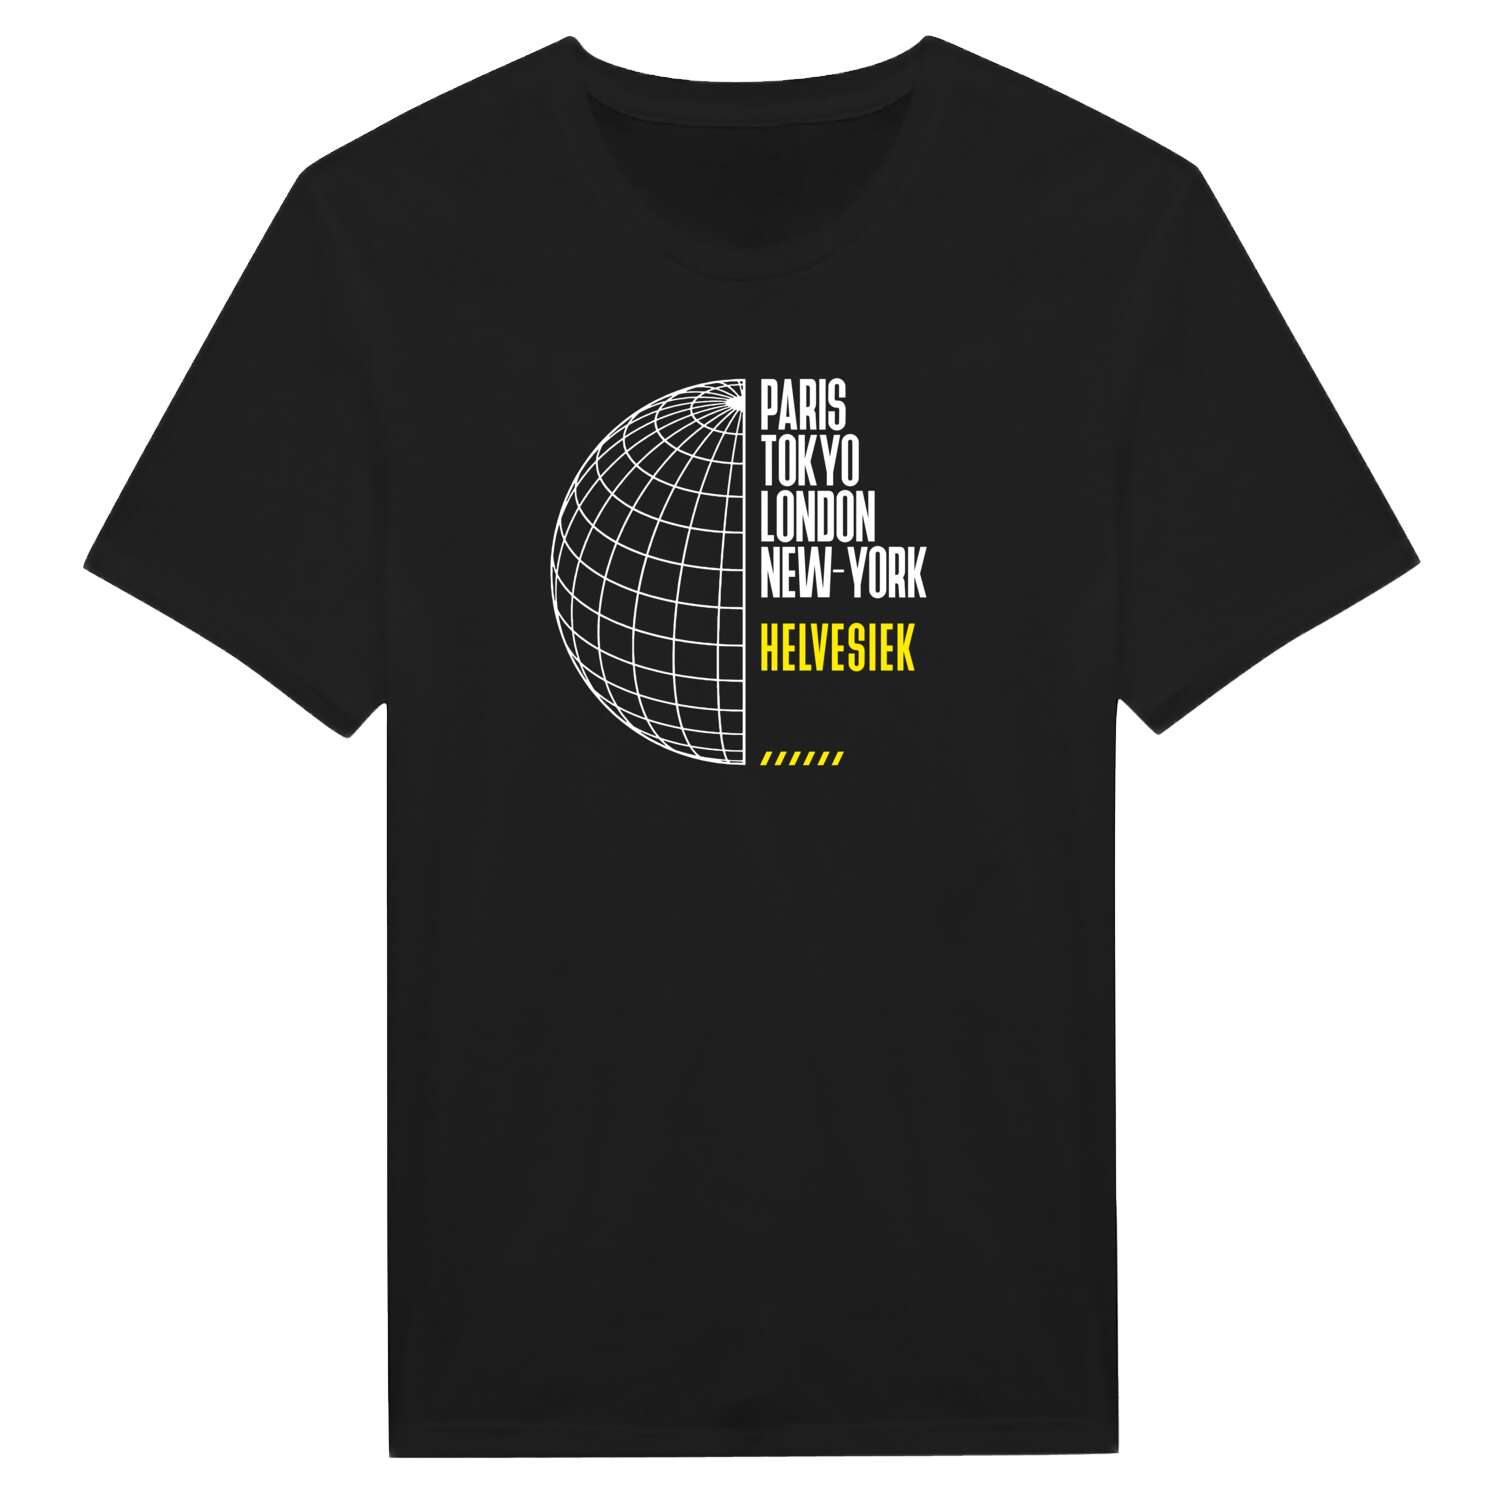 Helvesiek T-Shirt »Paris Tokyo London«